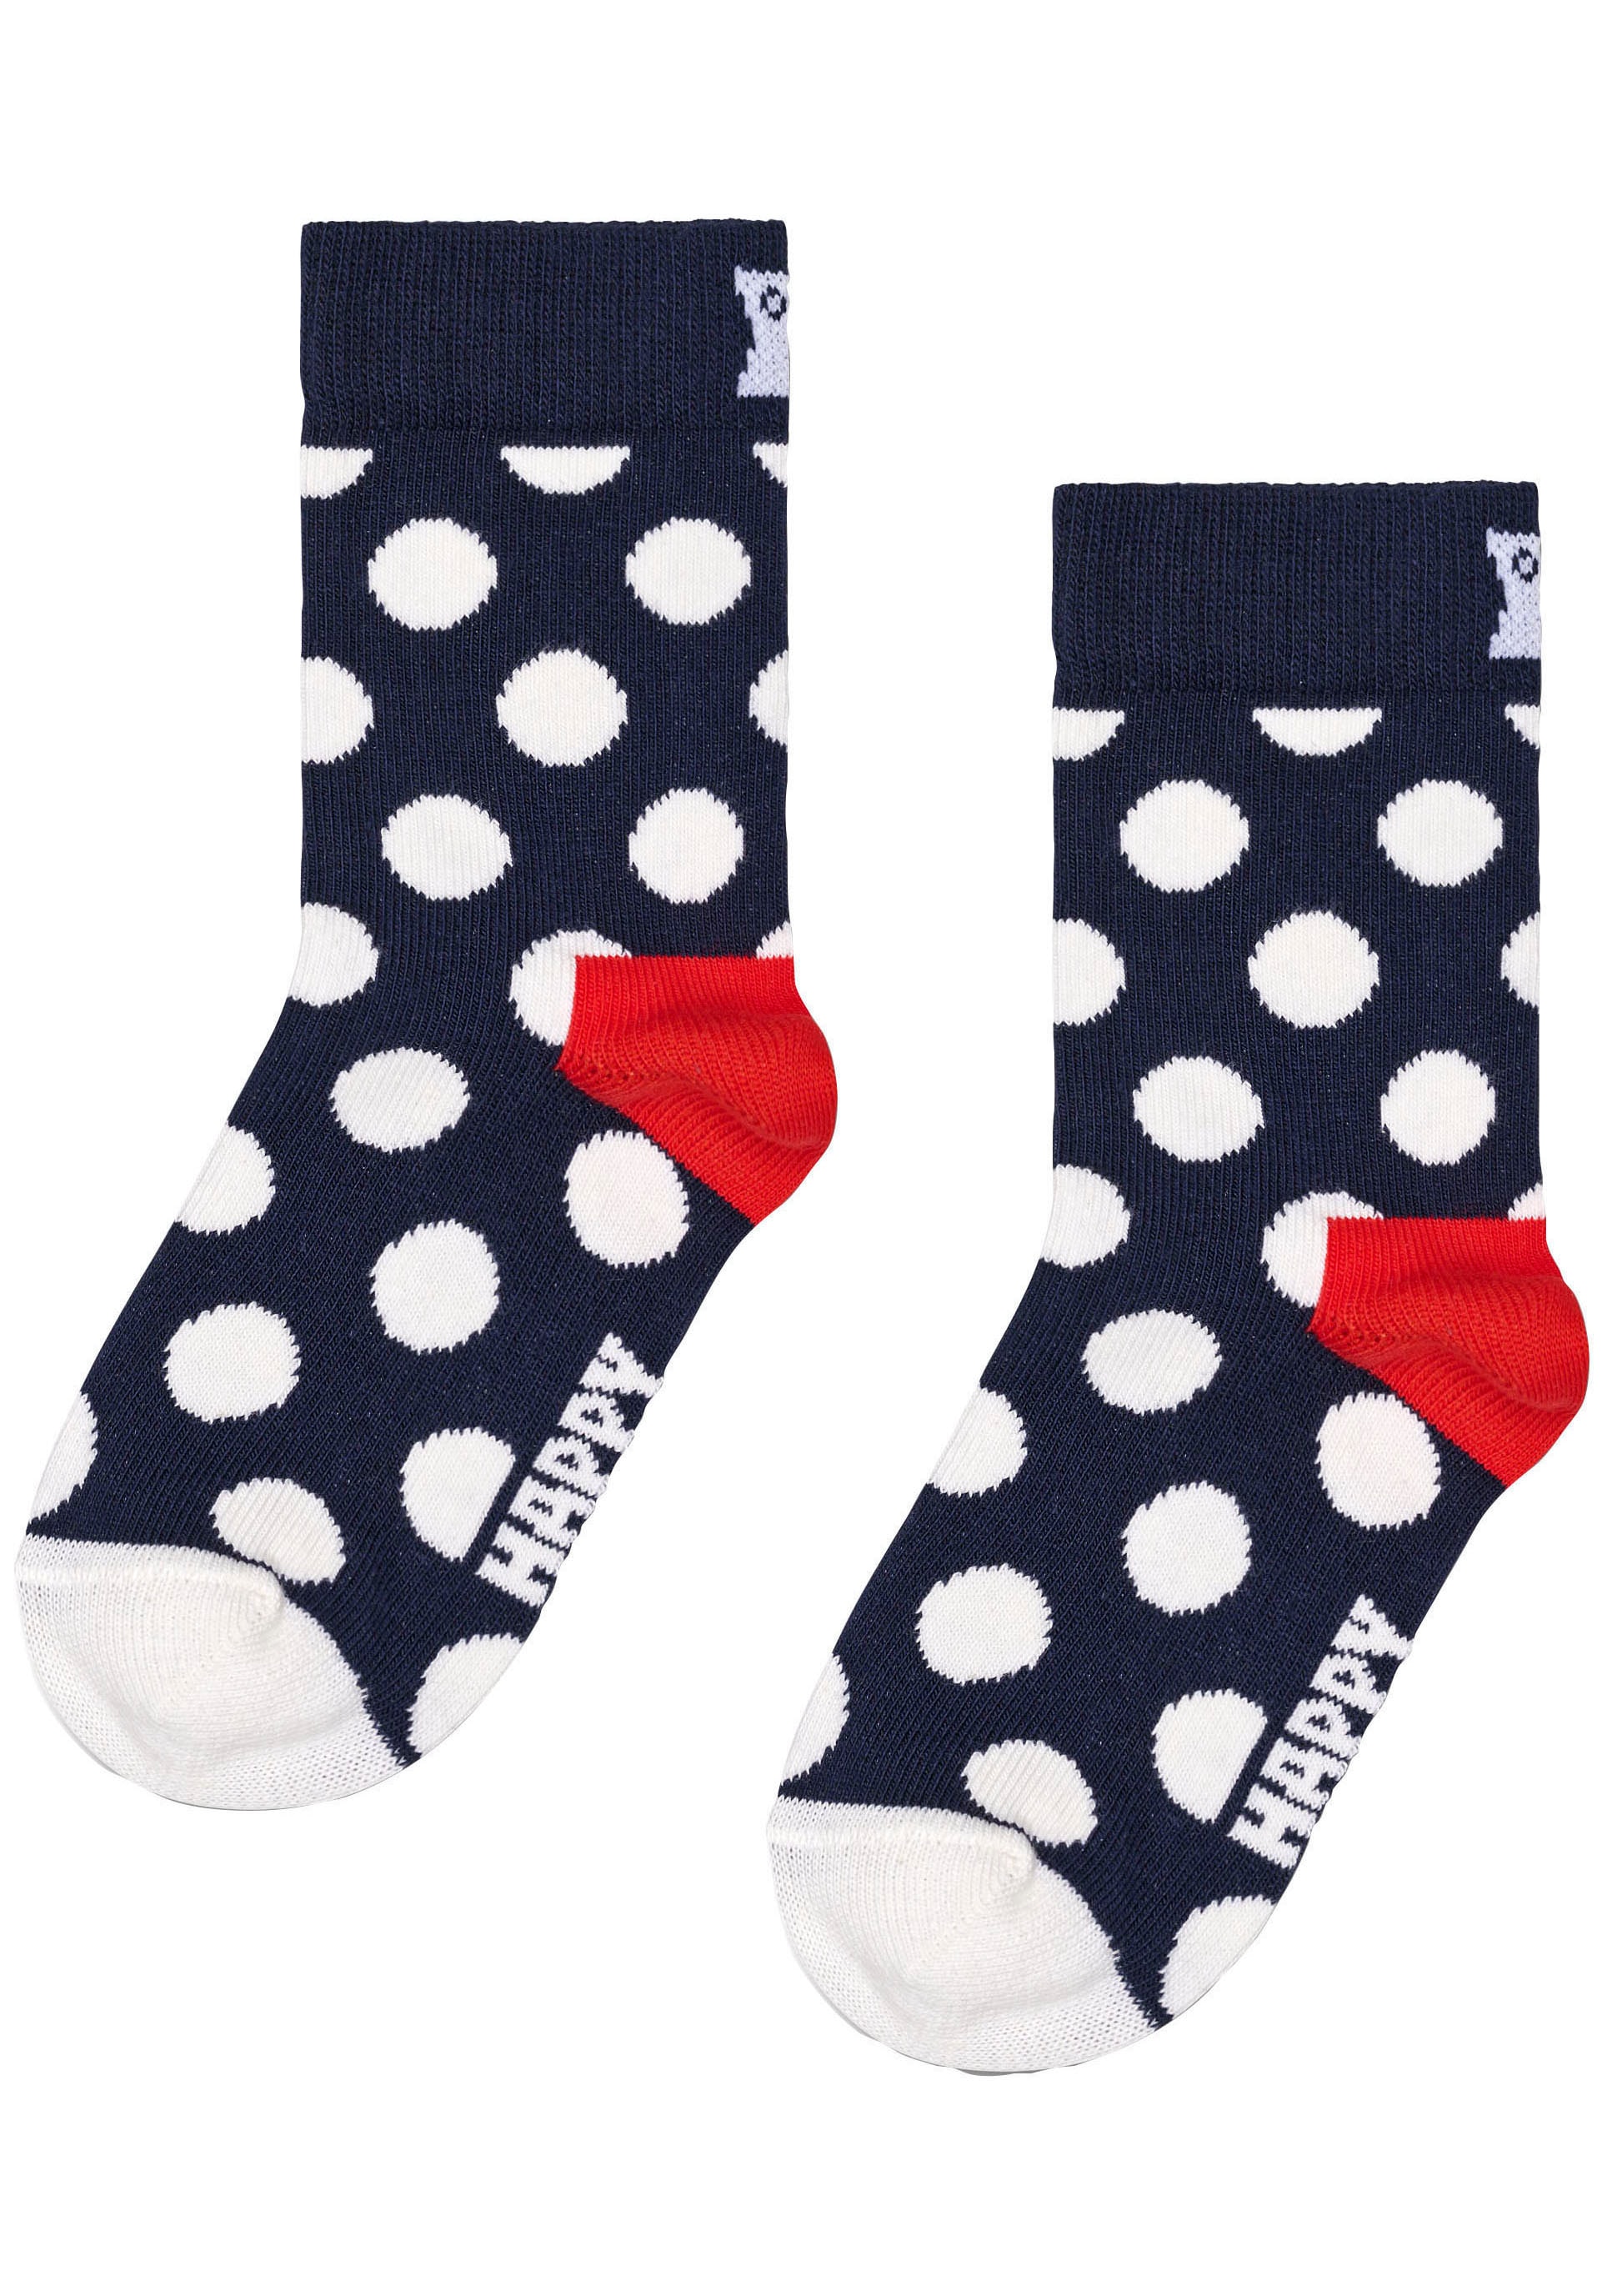 Happy Socks Socken bon prix 2 Kids Acheter à (Packung, un Punkte & Stripe Socks«, Streifen Paar), »2-Pack